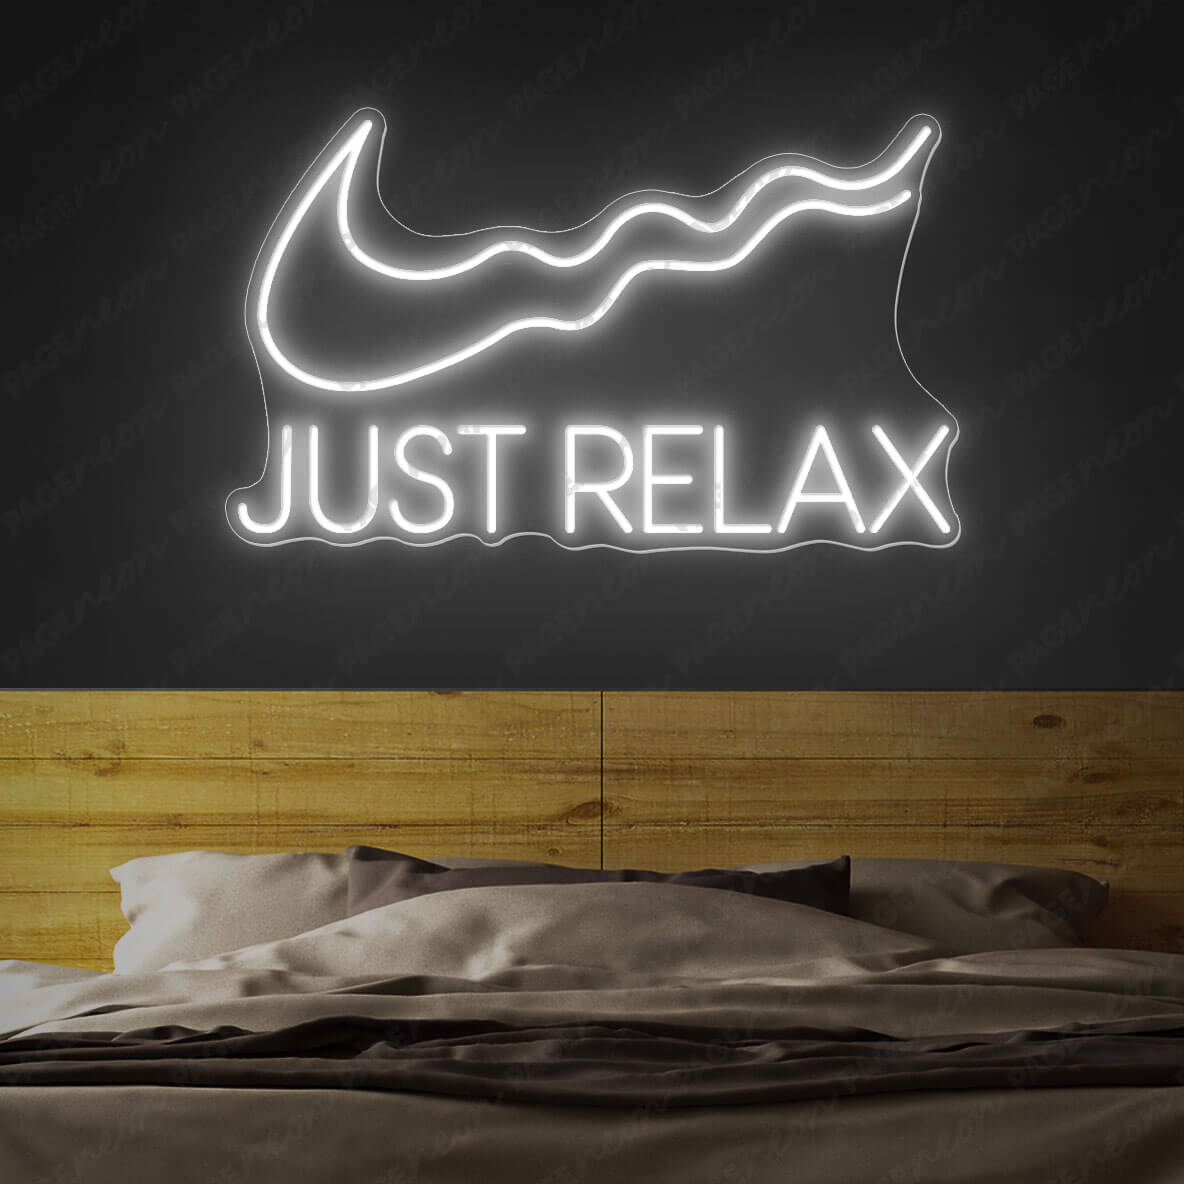 Just Relax Neon Sign Led Light White